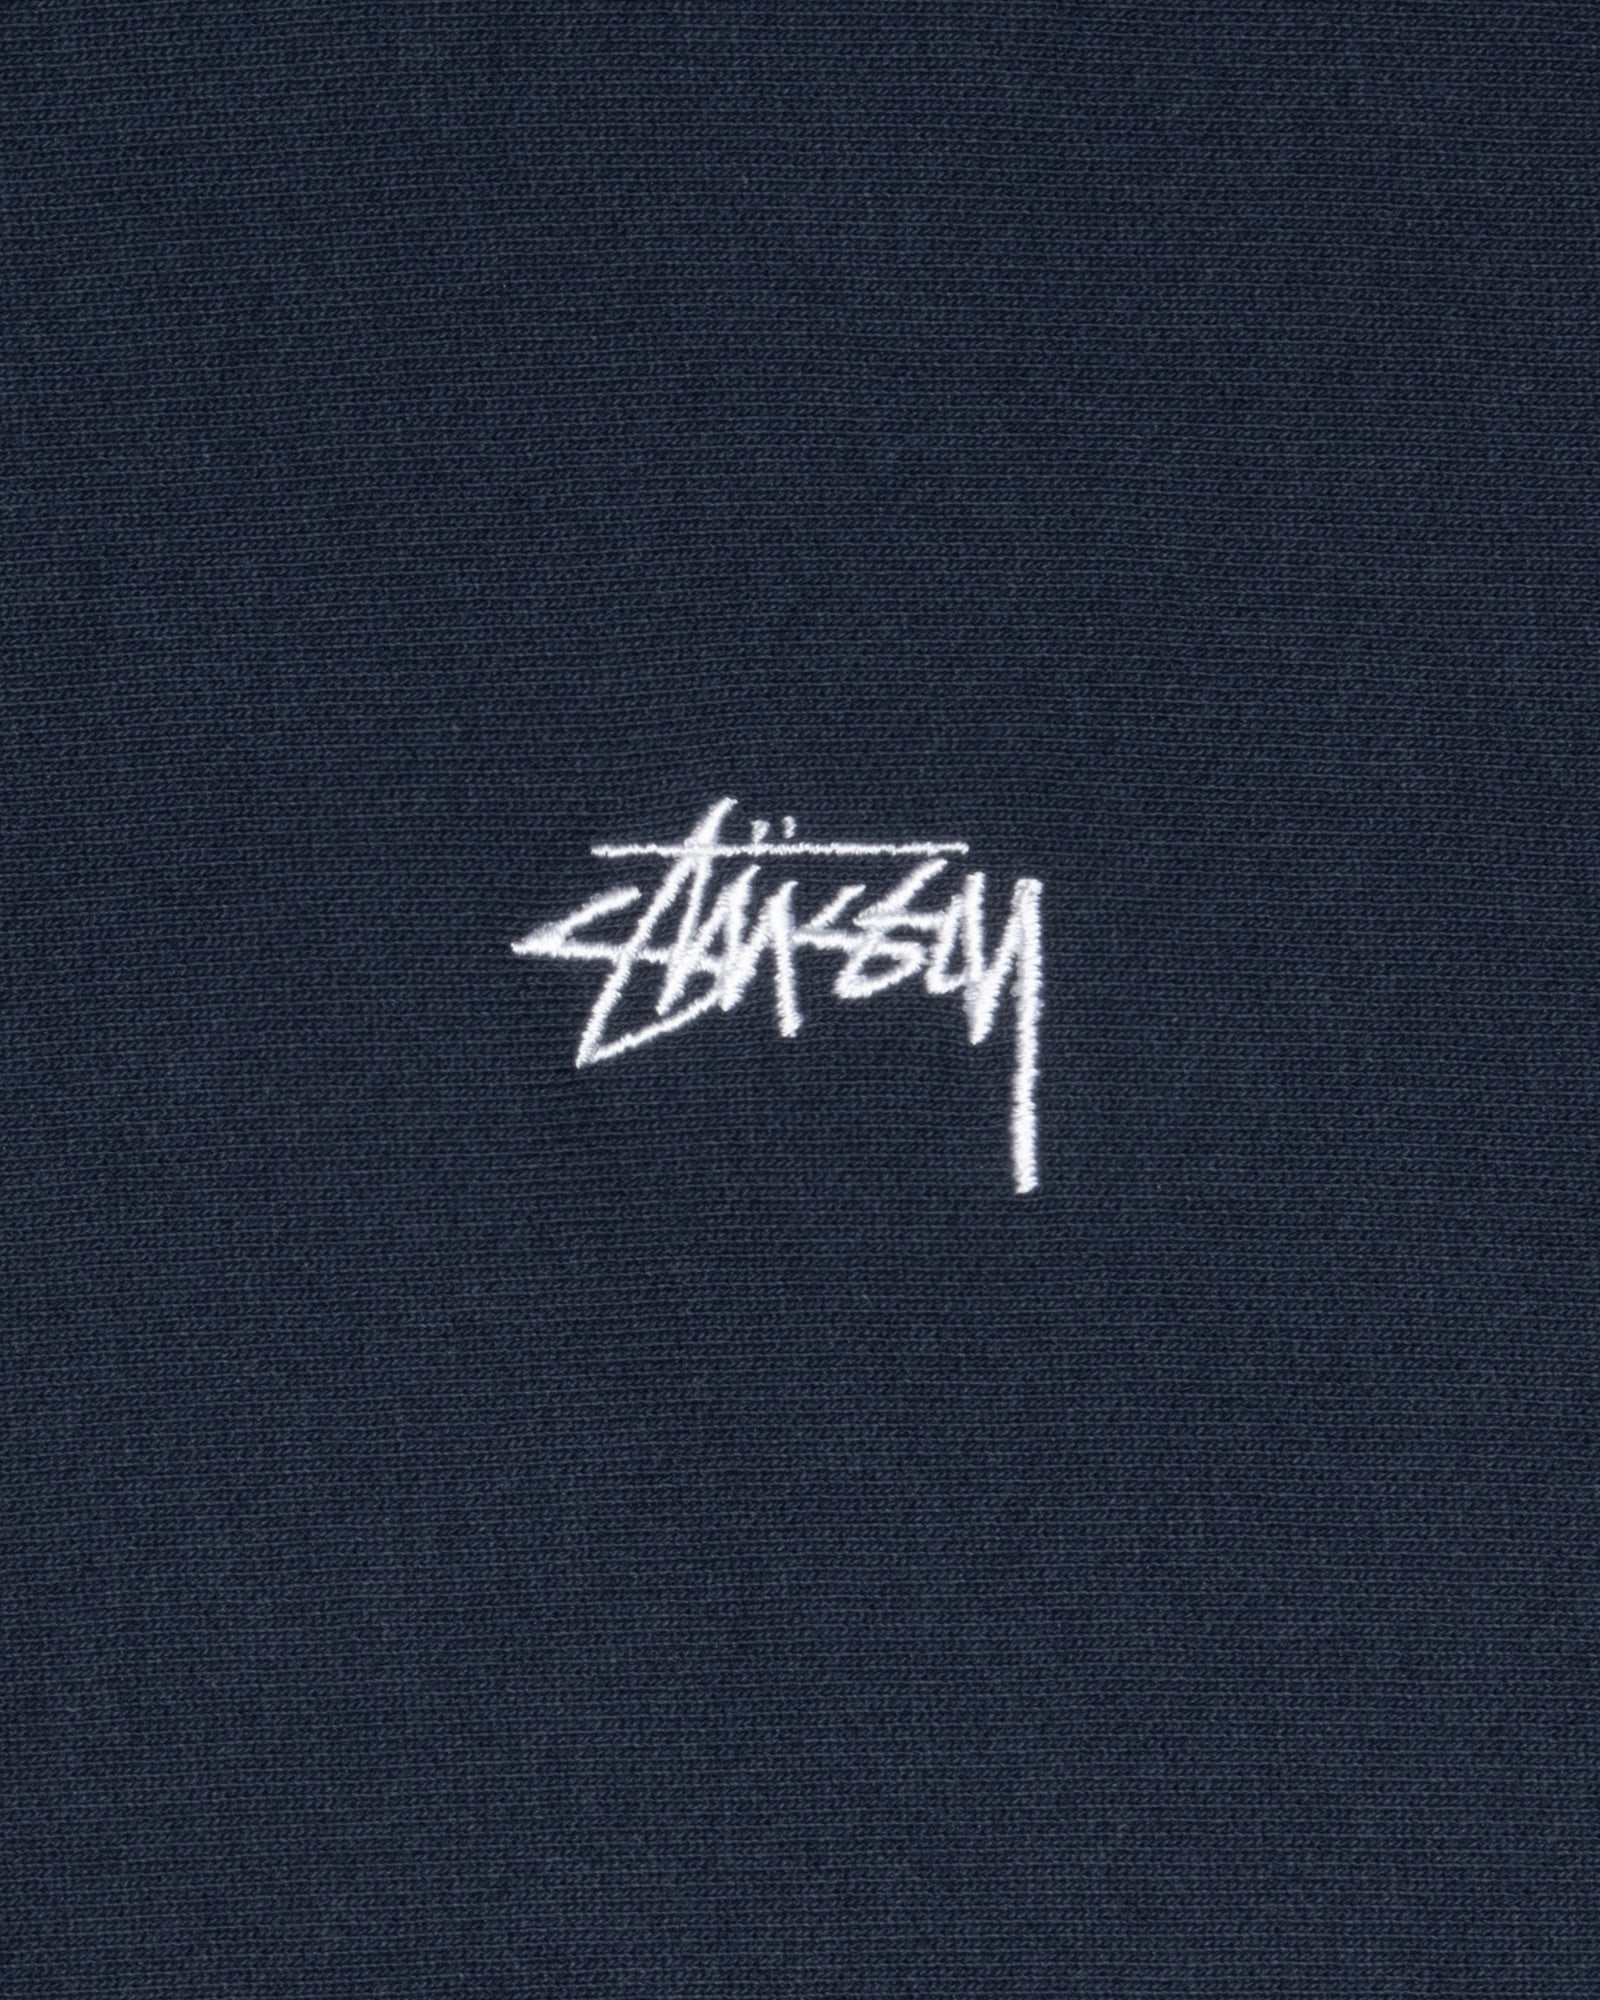 Stüssy Stock Logo Zip Hoodie Navy Sweats